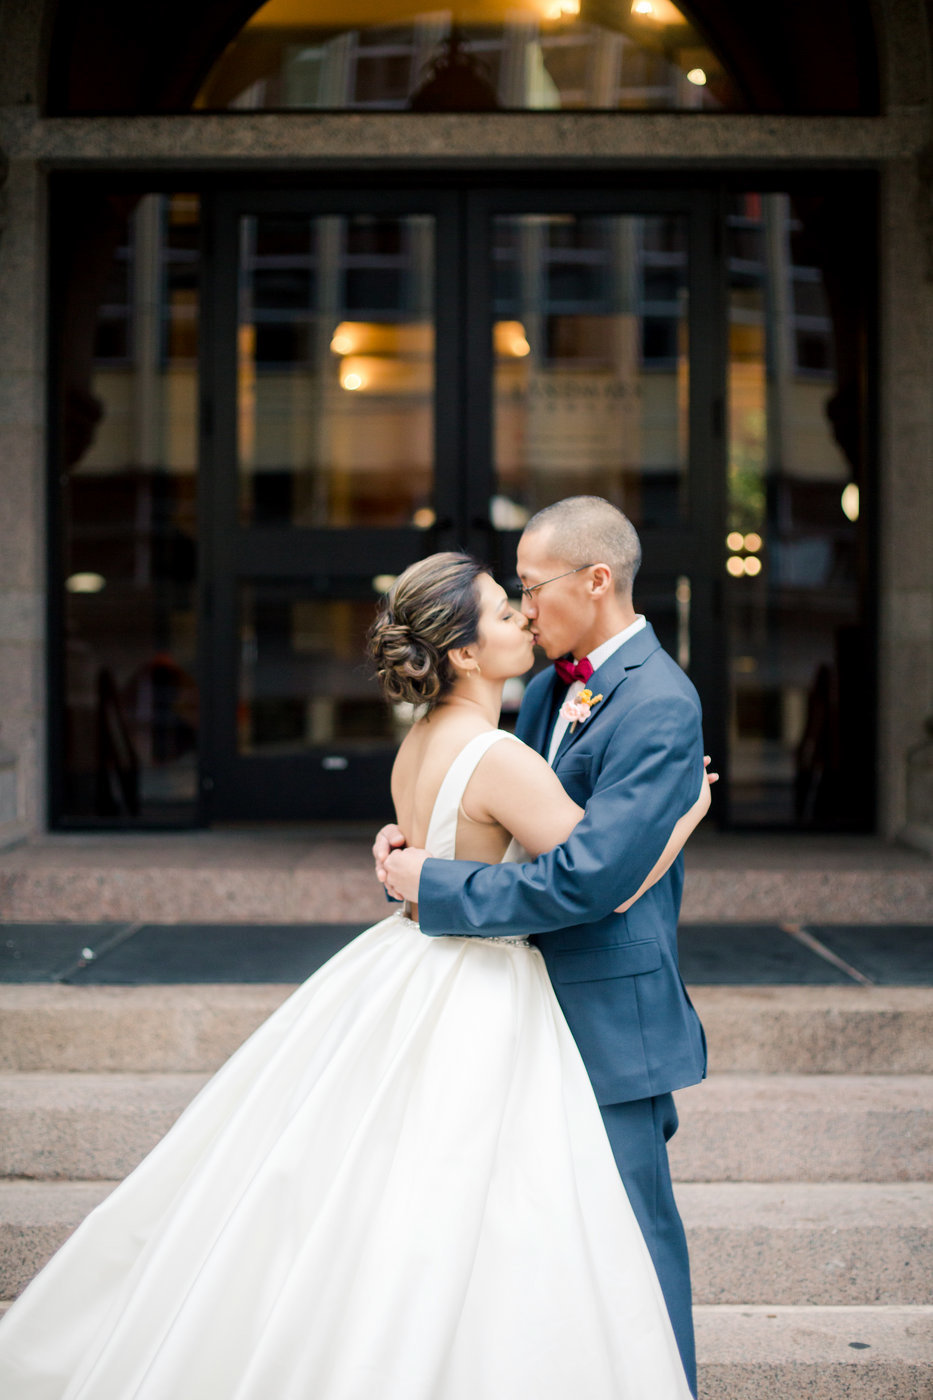 landmark center outdoor steps recently eloped couple kisses